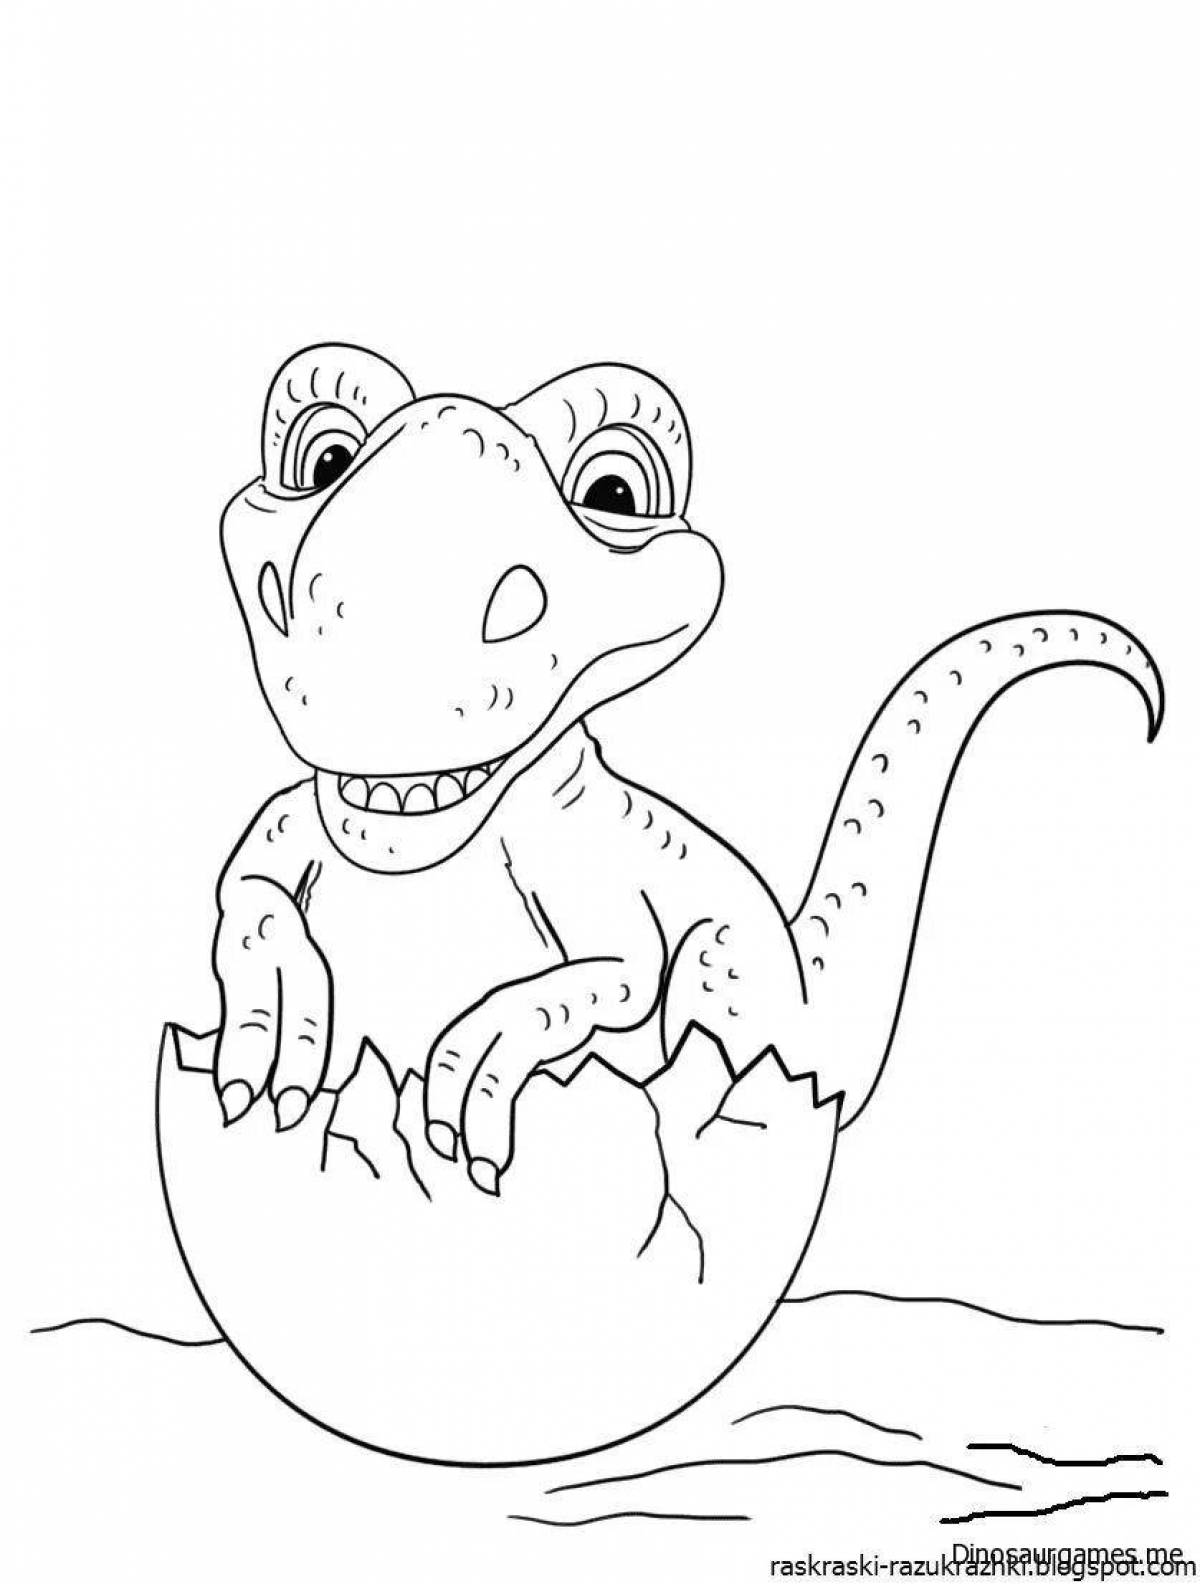 Funny cartoon dinosaur coloring book